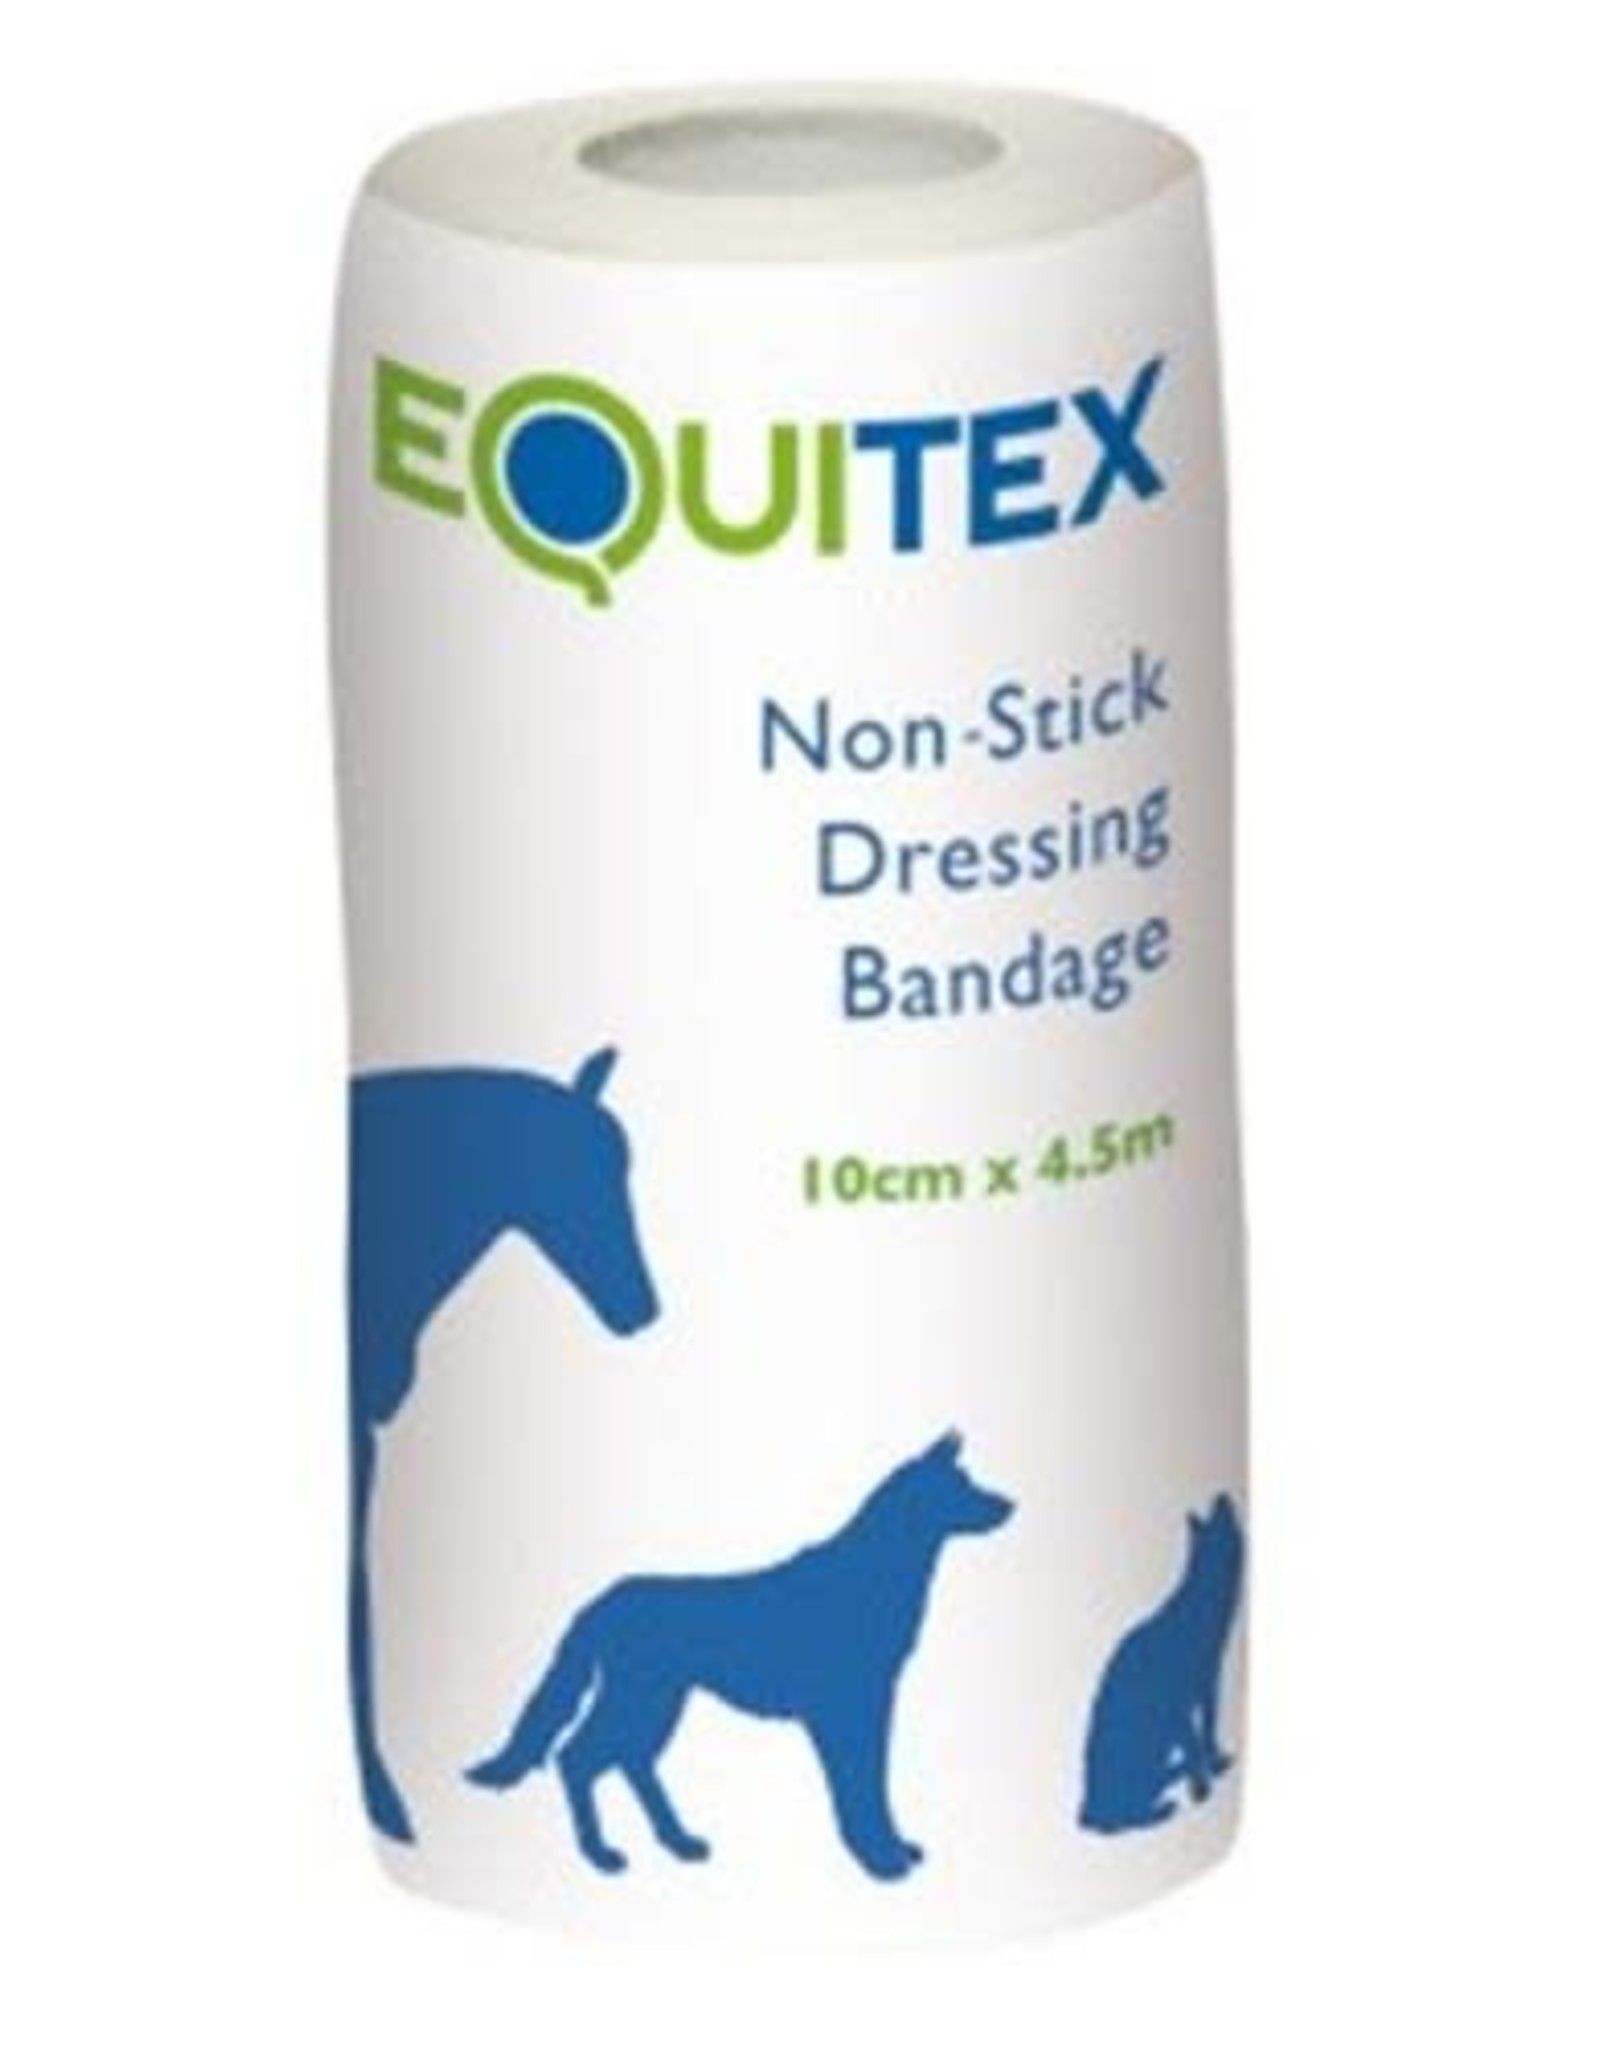 Equitex Non-Stick Dressing Bandage